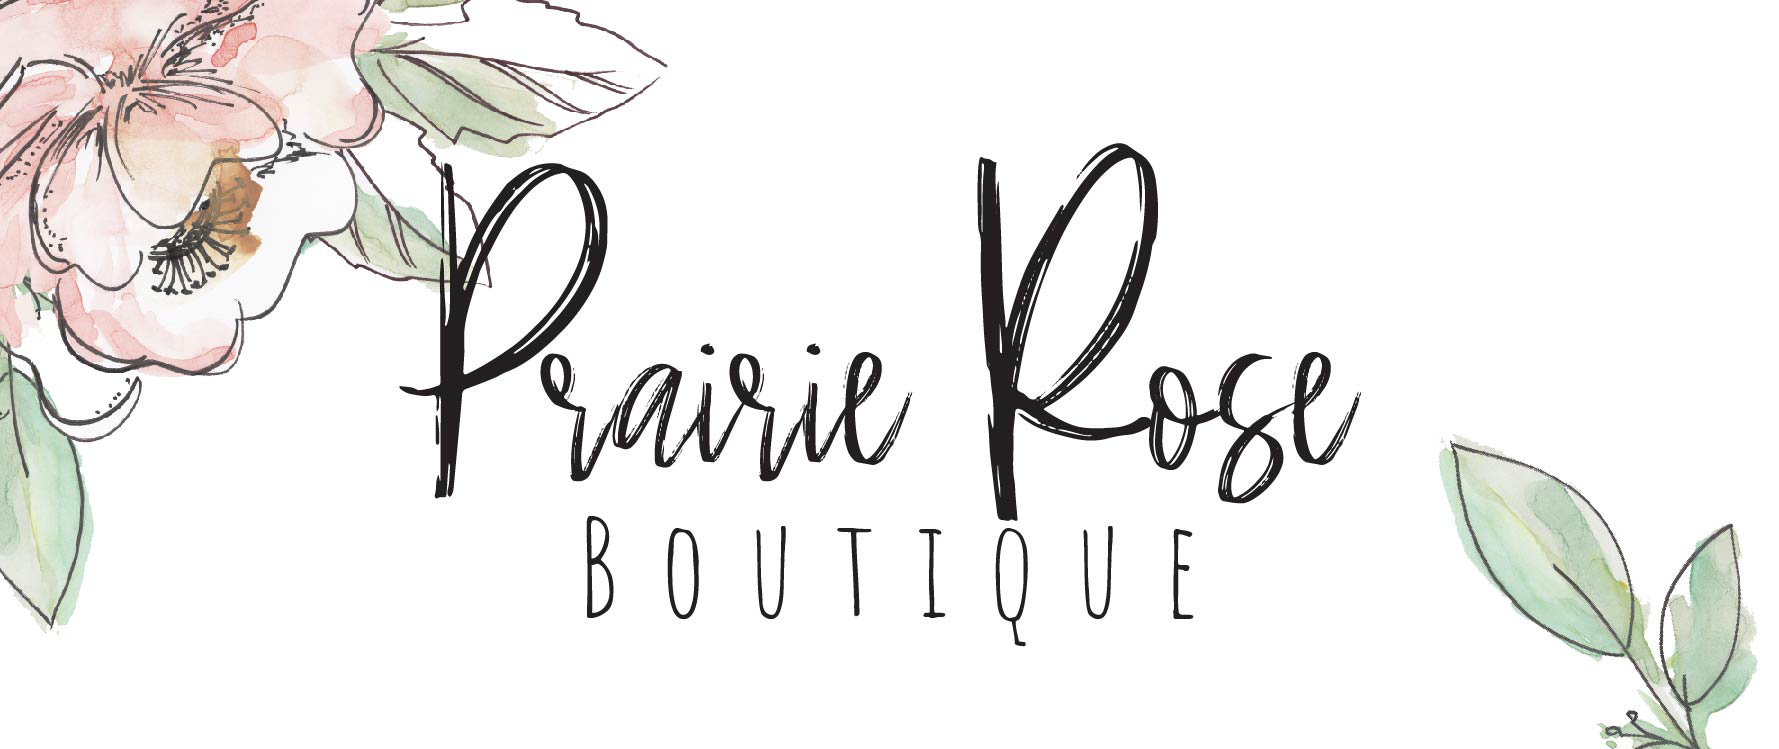 Miss Macie Boots – Prairie Rose Boutique